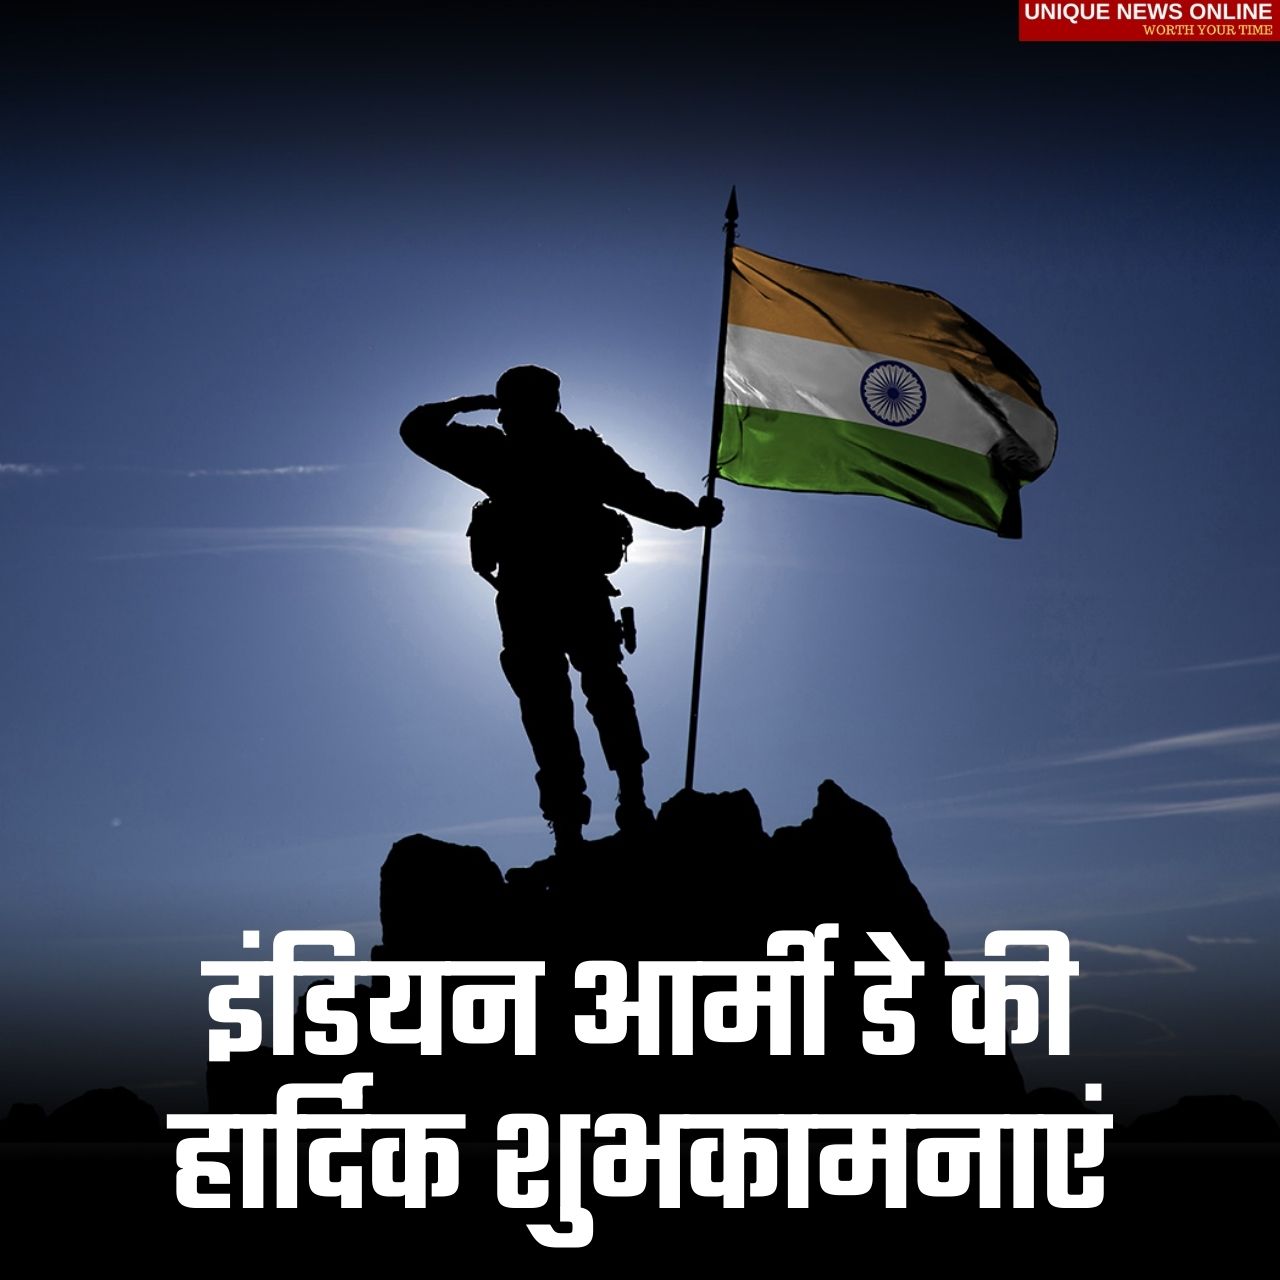 भारतीय सैन्य दिन 2022: हिंदी शुभेच्छा, HD प्रतिमा, कोट्स, शायरी, स्टेटस, ग्रीटिंग्ज, मेसेज, "सेना दिवस" ​​निमित्त तुमच्या प्रियजनांना शुभेच्छा देण्यासाठी घोषणा